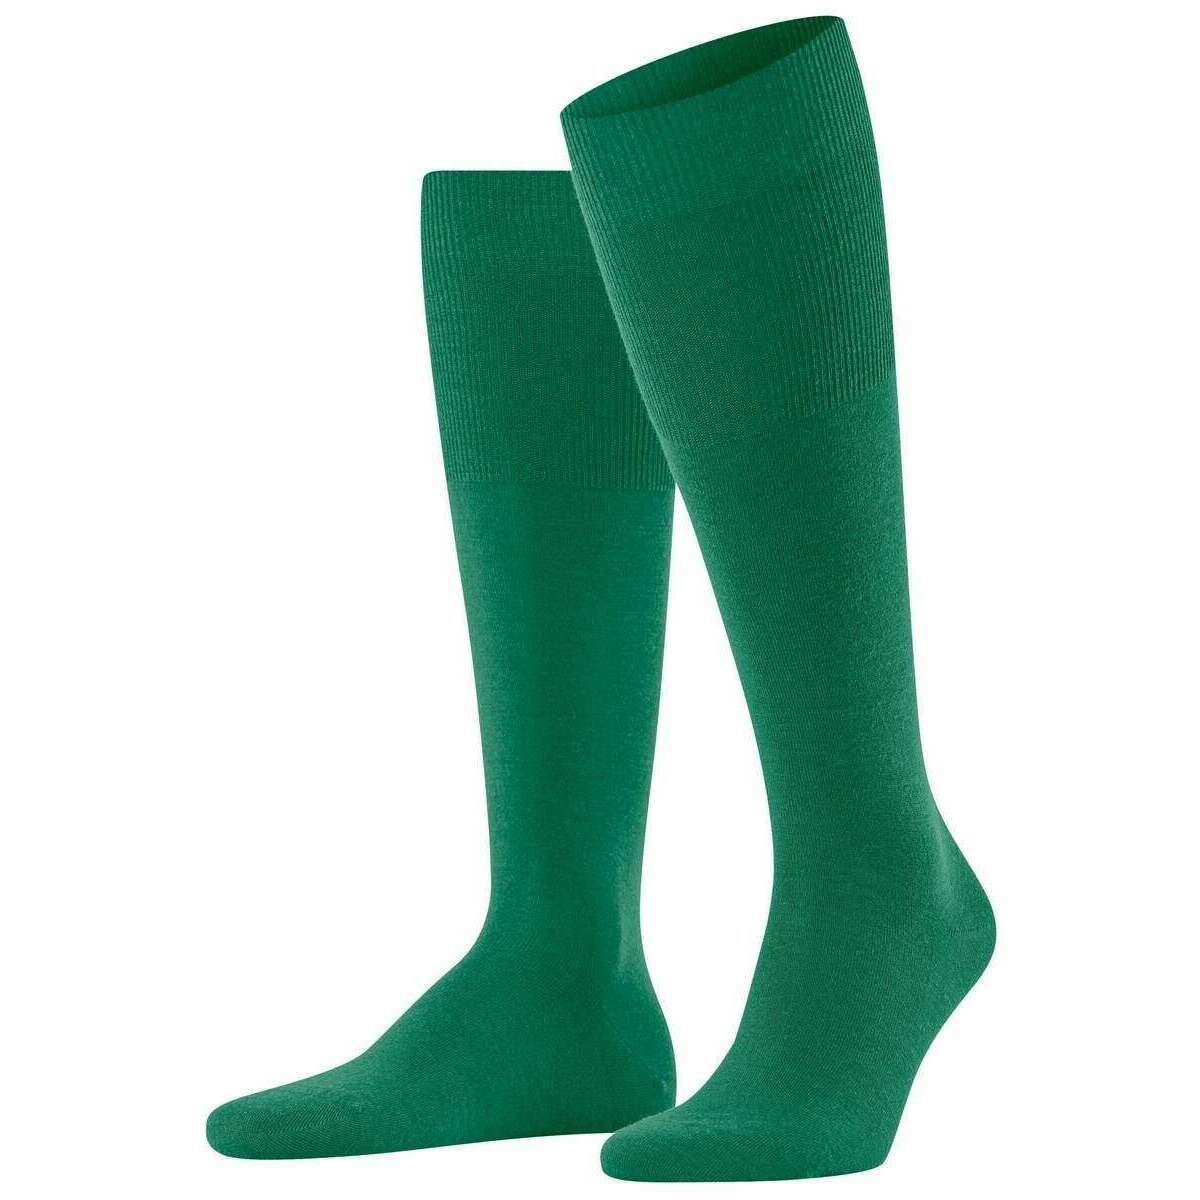 Falke Airport Knee High Socks - Emerald Green